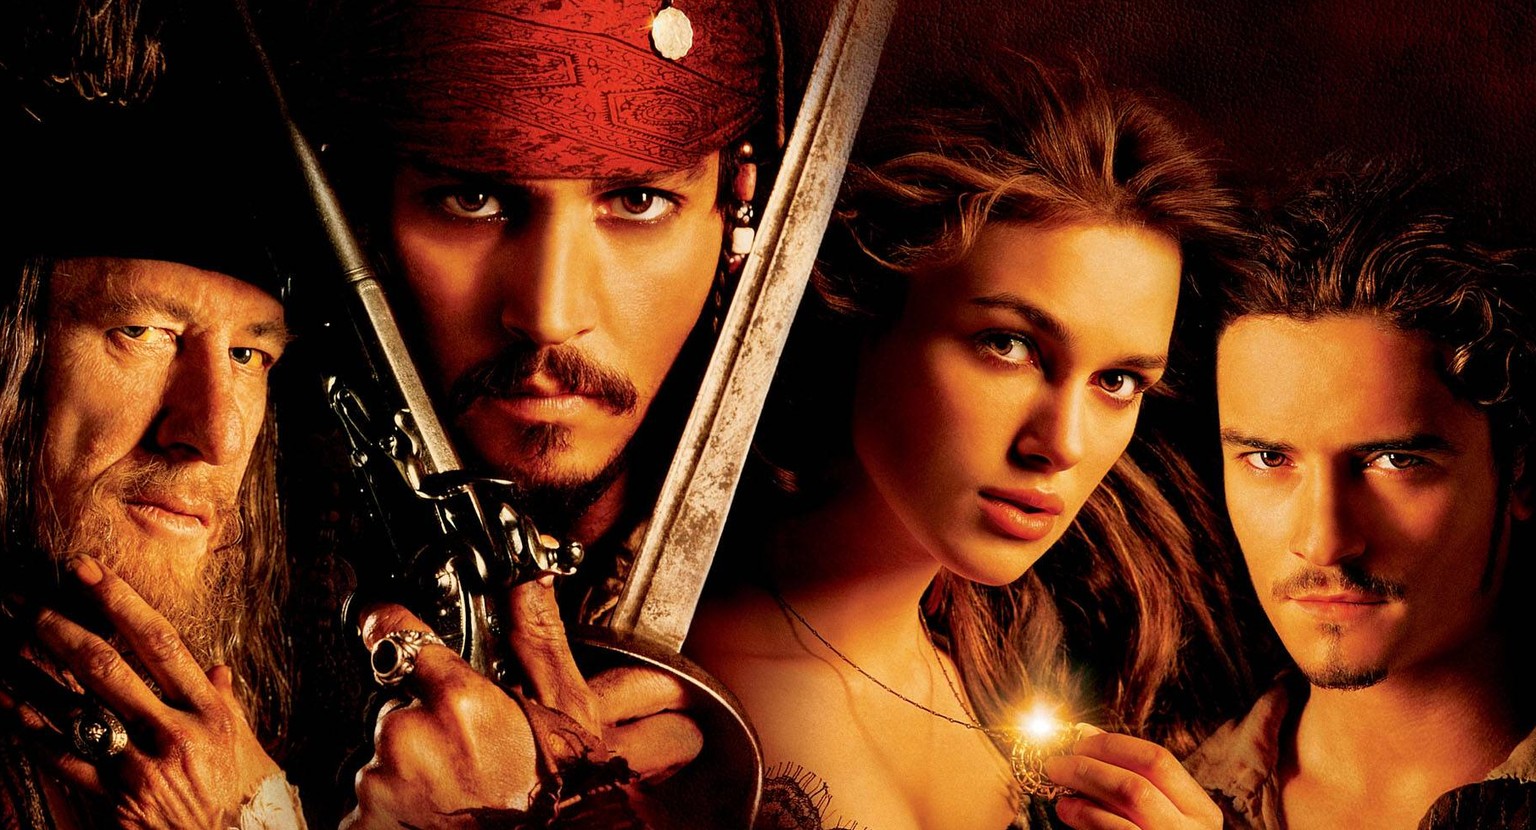 Bildnummer: 55109466 Datum: 28.06.2003 Copyright: imago/EntertainmentPictures
2003 - Pirates Of The Caribbean: The Curse Of The Black Pearl - Movie Set Jun 28, 2003; Los Angeles, CA, USA; (L-R): Acto ...